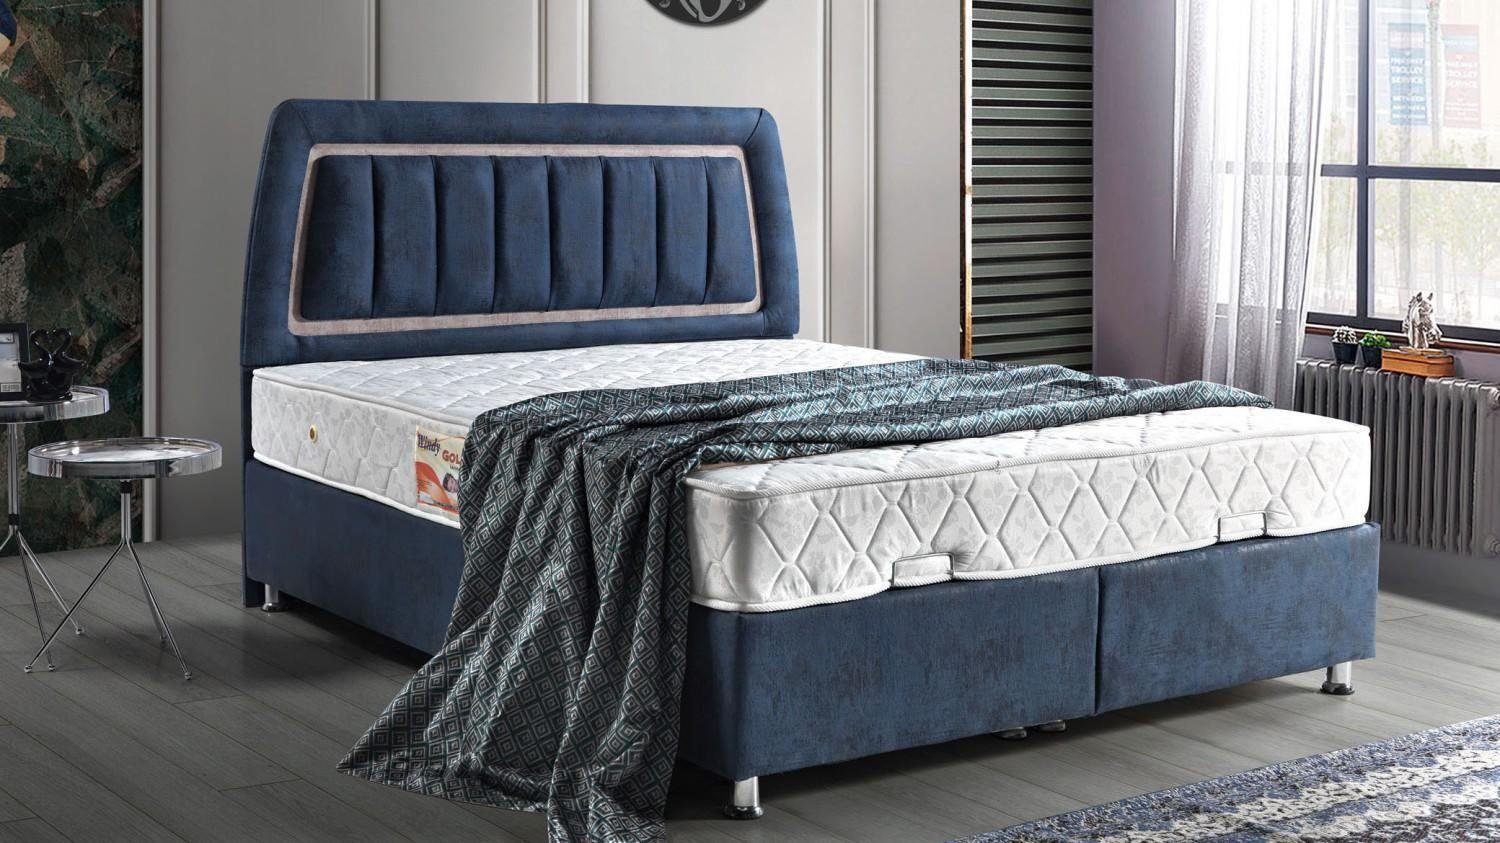 JVmoebel Bett Bett Design Betten Luxus Bettkasten Polster Schlafzimmer Möbel Modern (Bett), Made In Europe